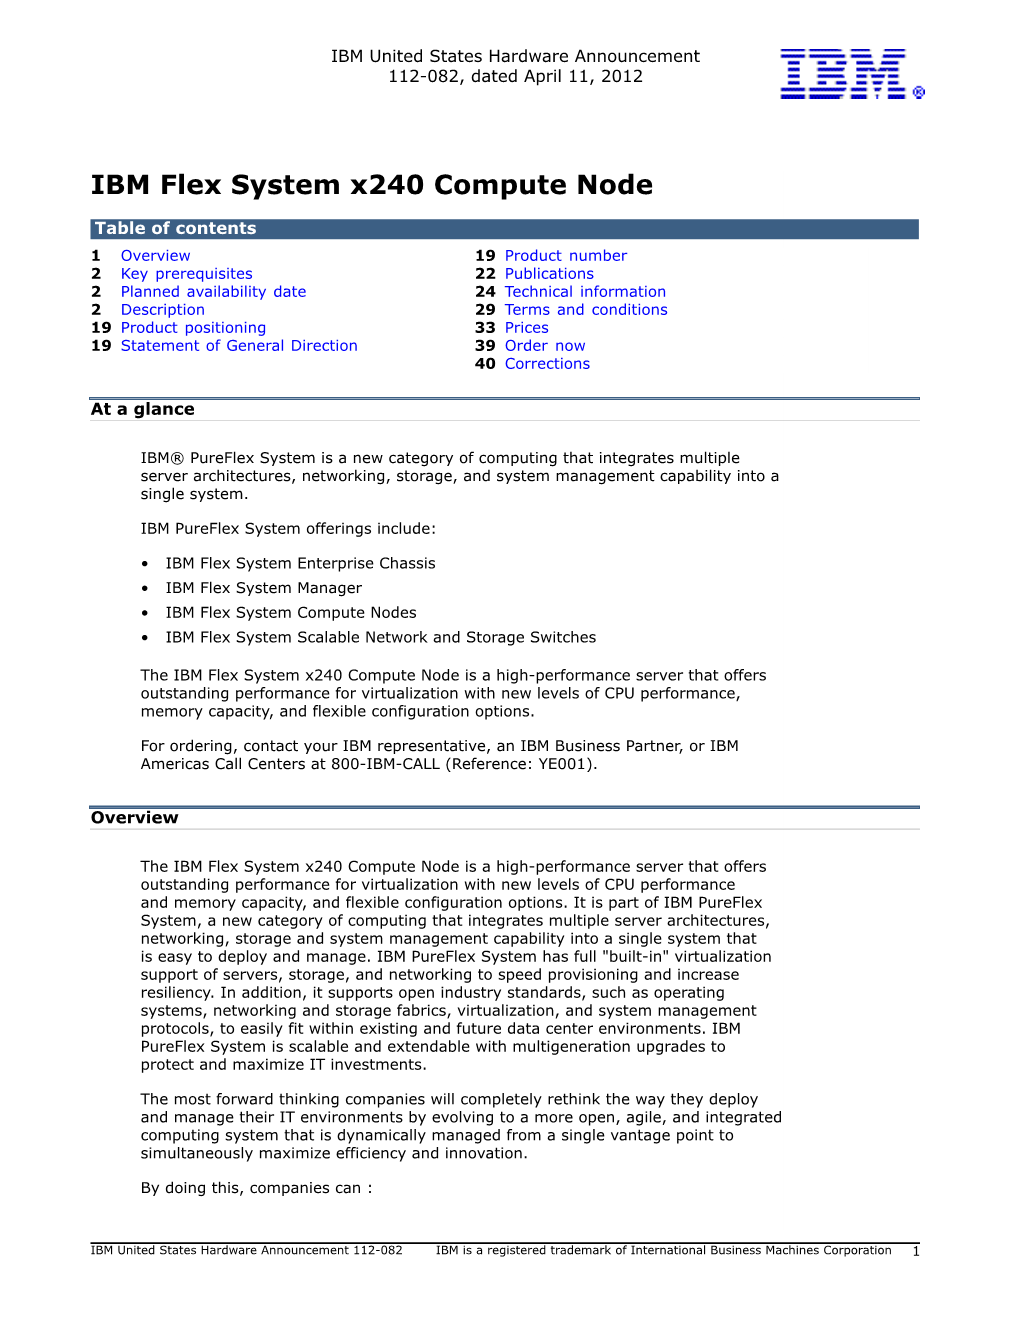 IBM Flex System X240 Compute Node